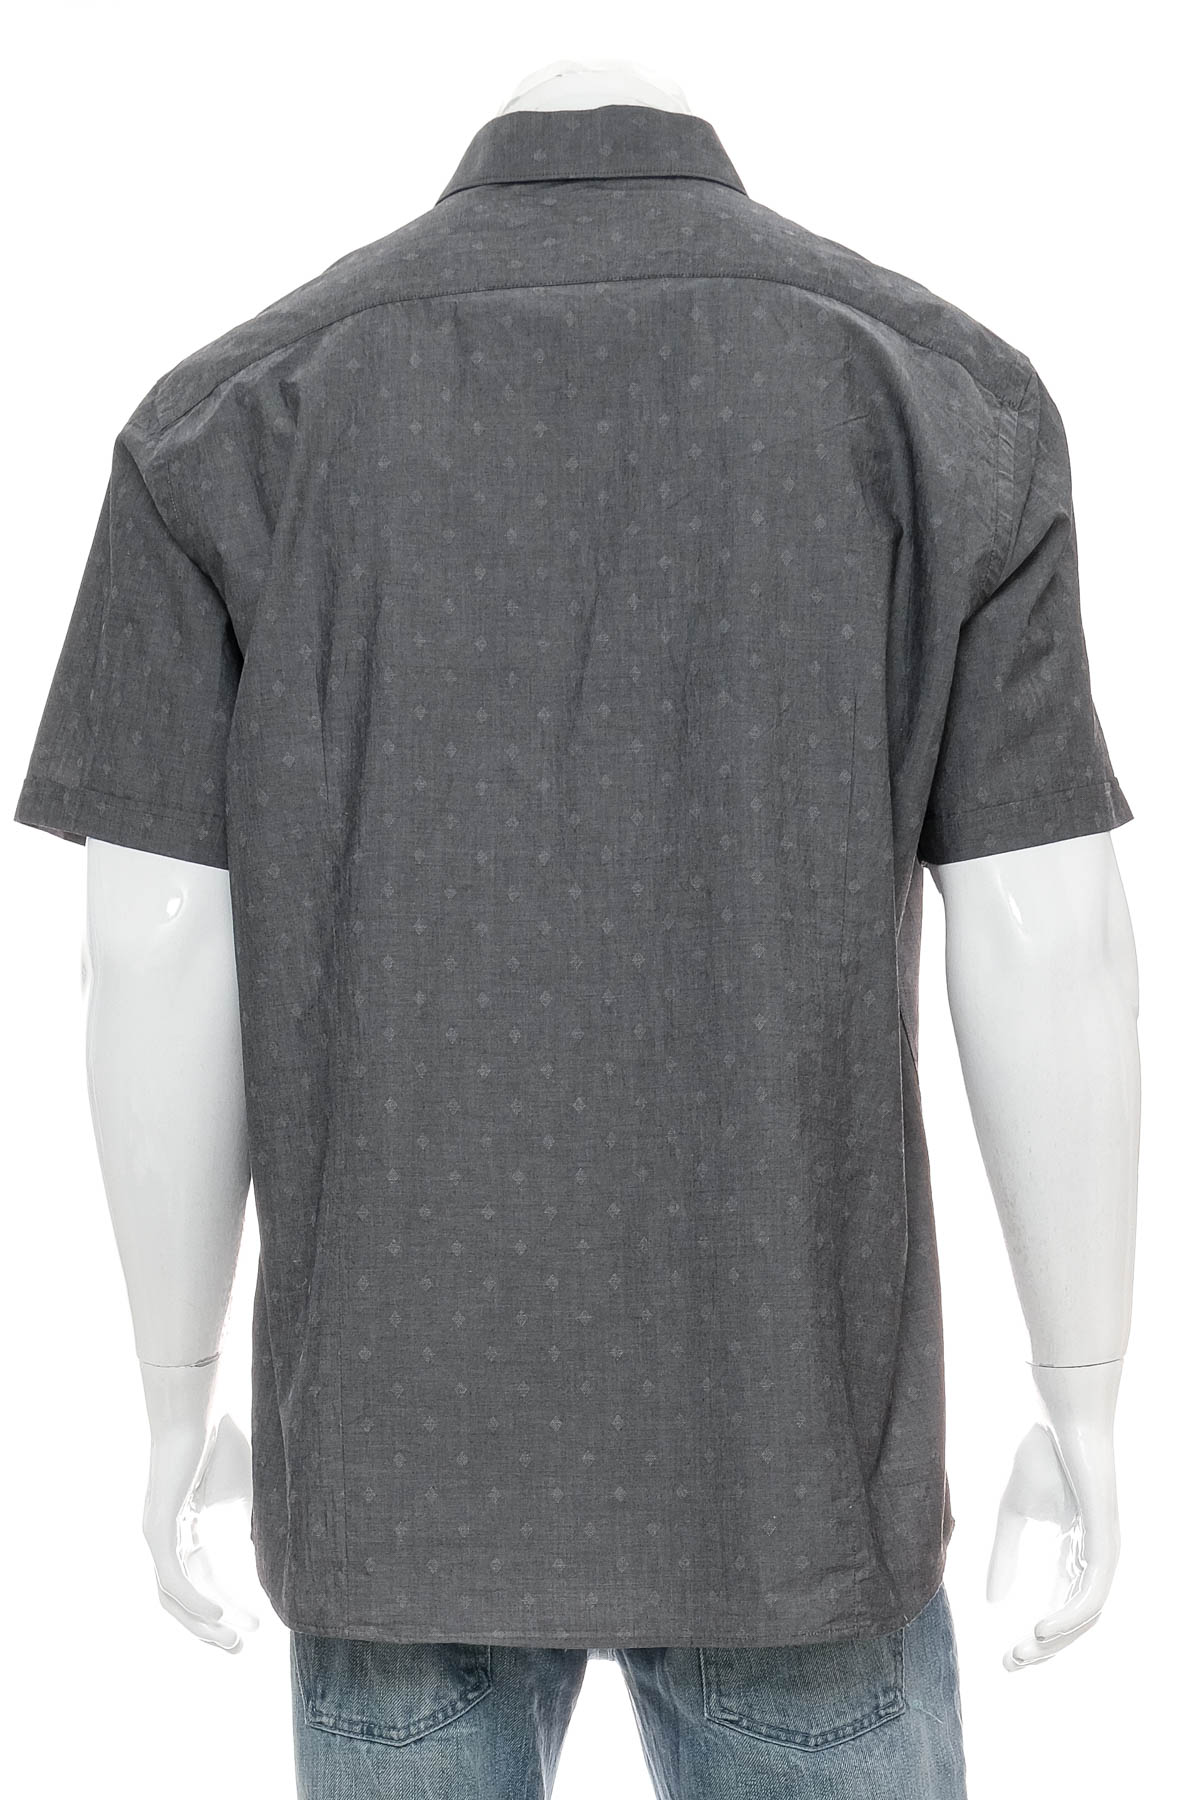 Men's shirt - Target - 1